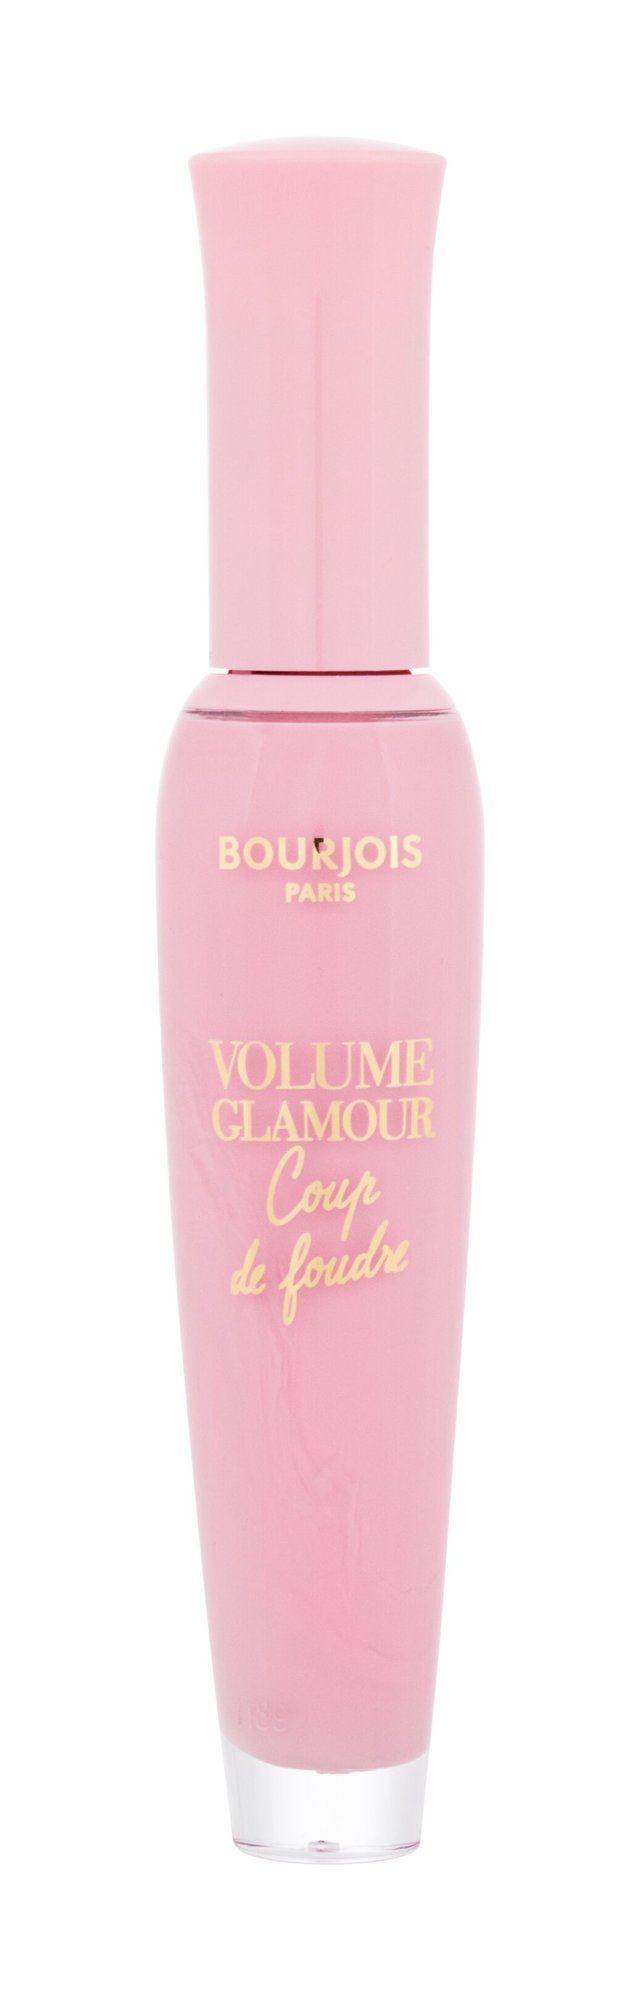 BOURJOIS Paris Volume Glamour Coup De Foudre blakstienų tušas